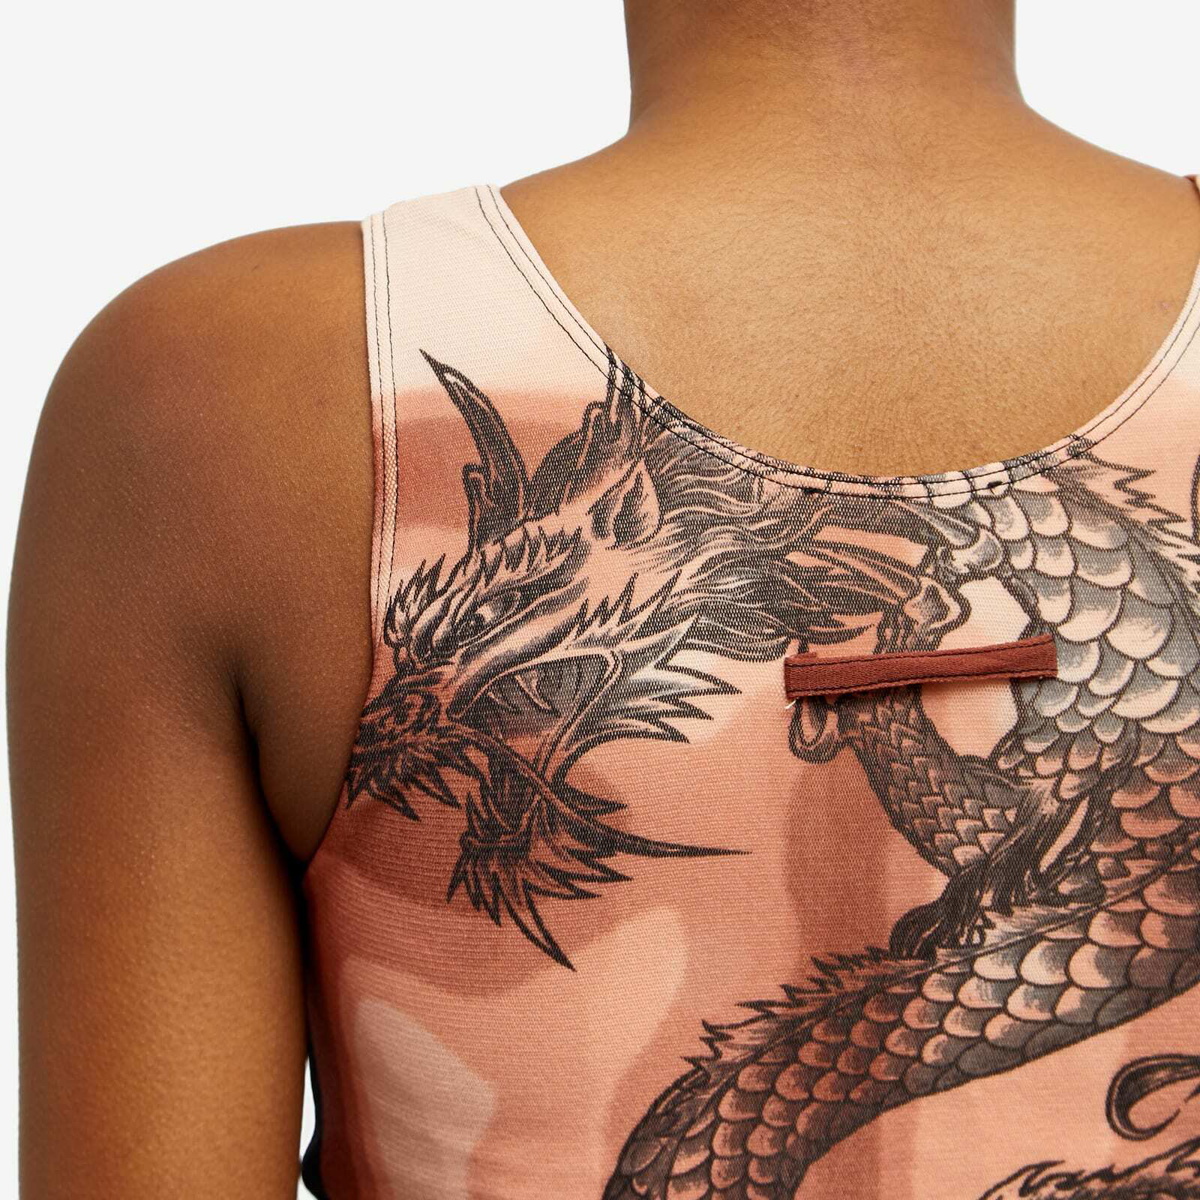 Jean Paul Gaultier Printed Safe Sex Tattoo Long Sleeve Crew Neck Top in Nude,  Brown, & Black